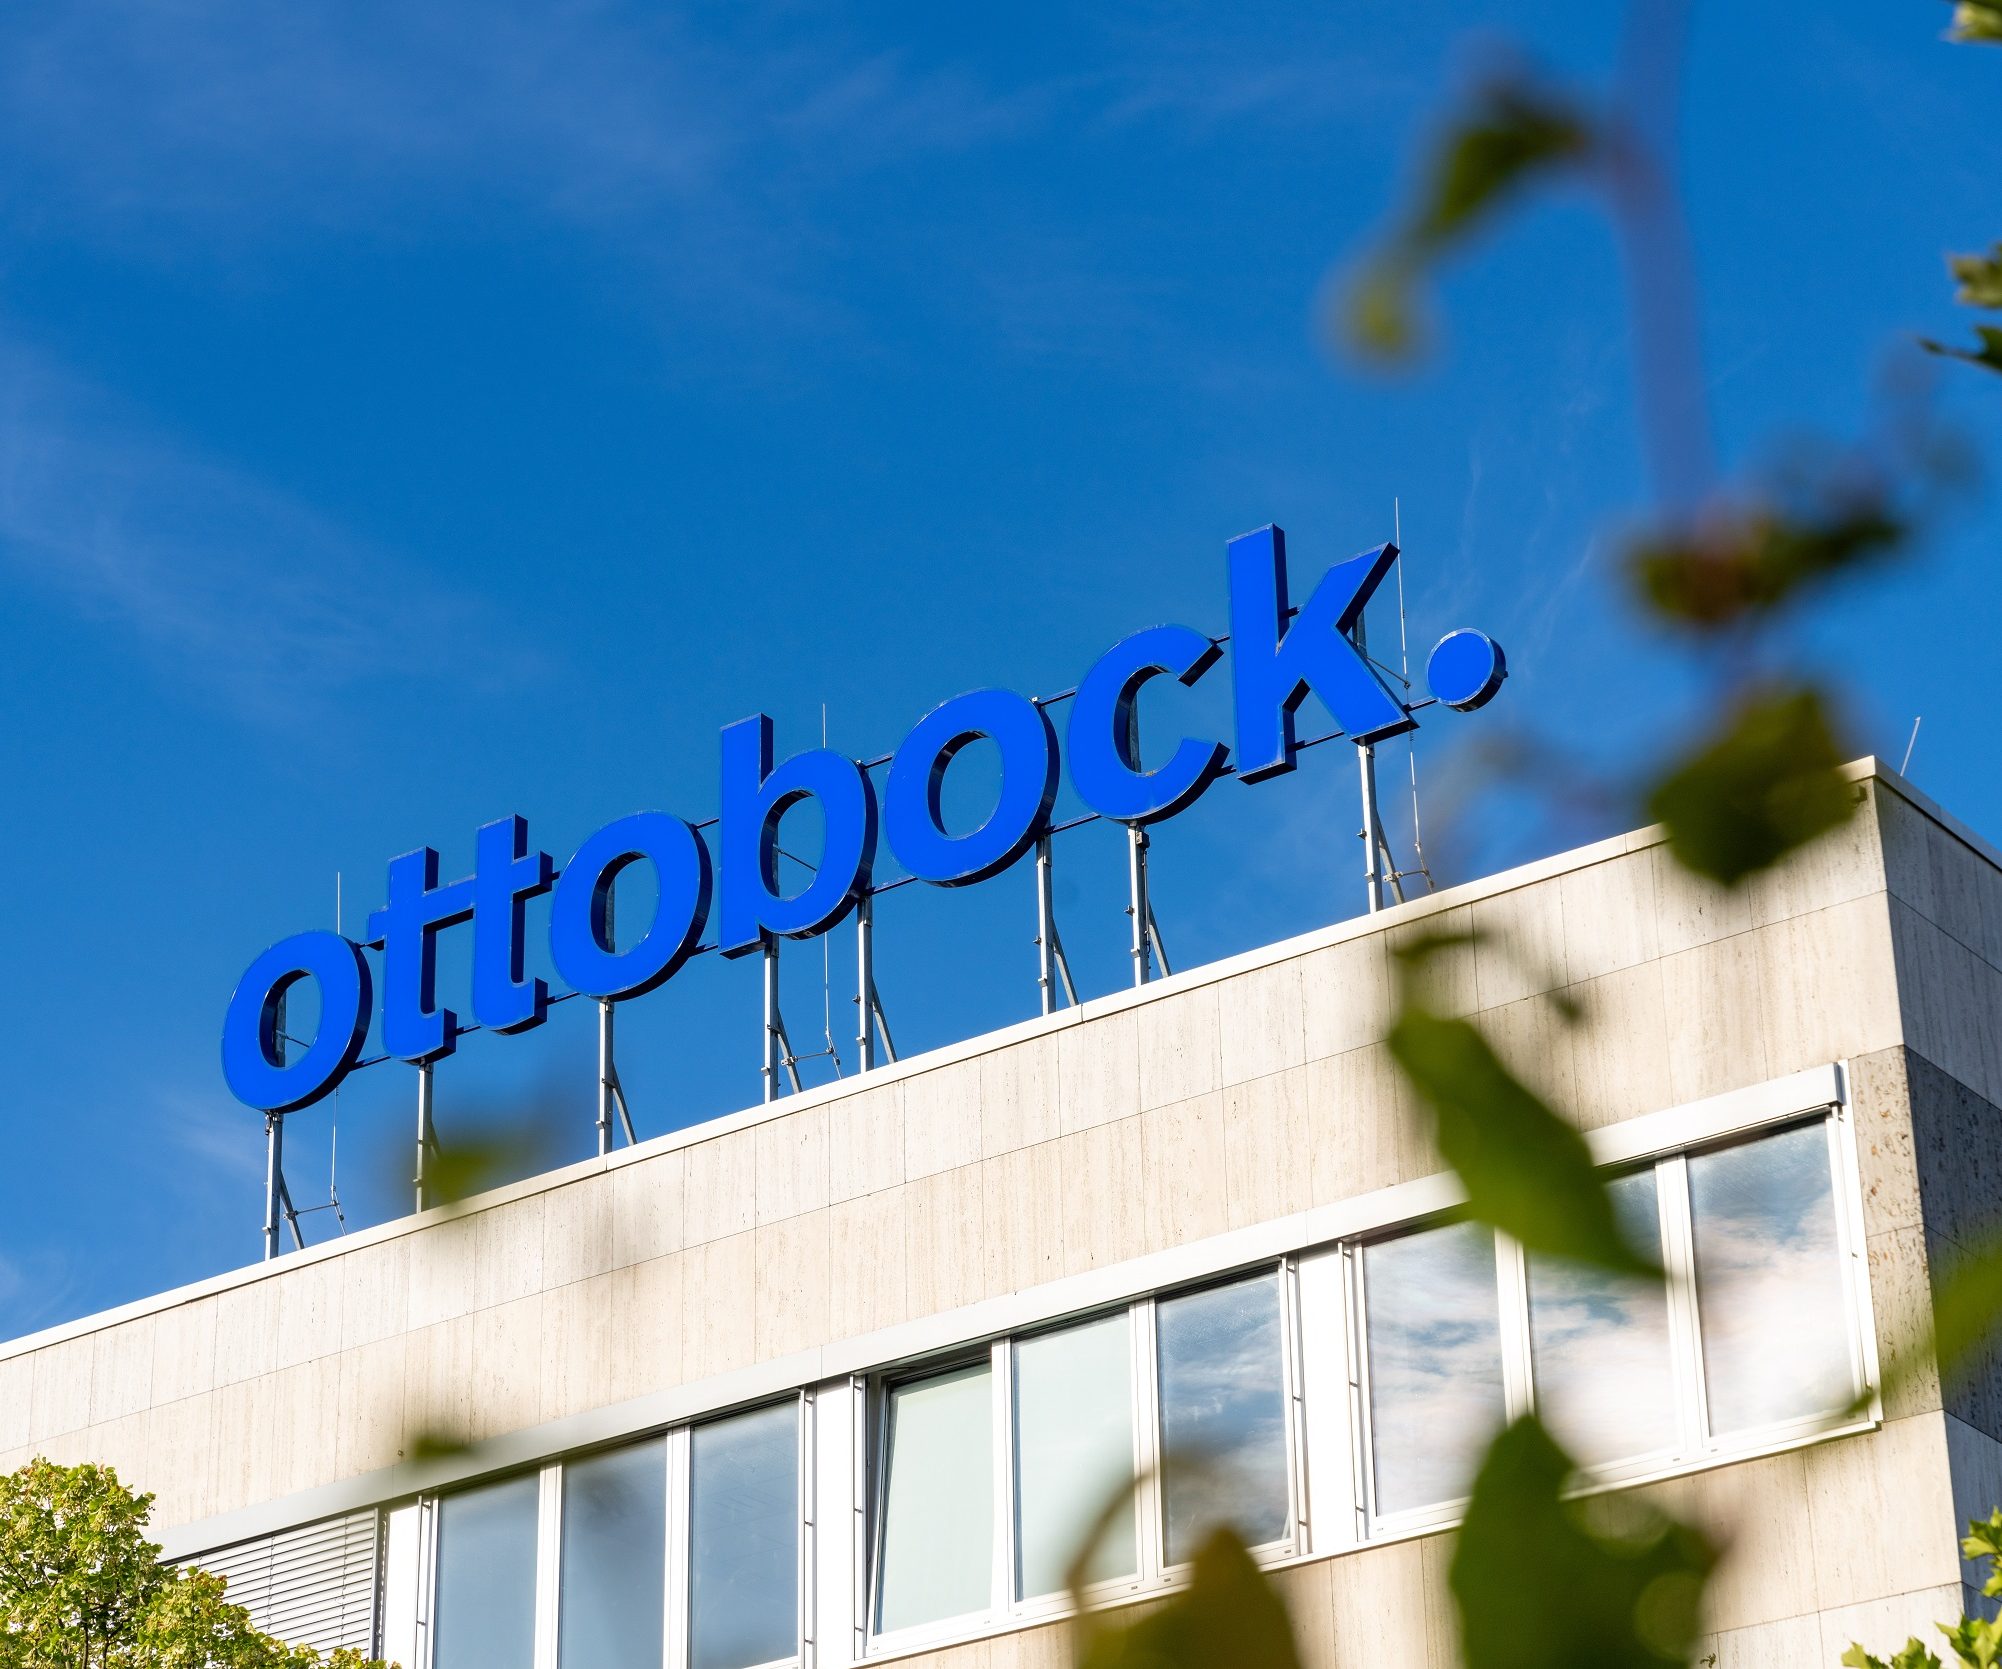 Ottobock-Logo